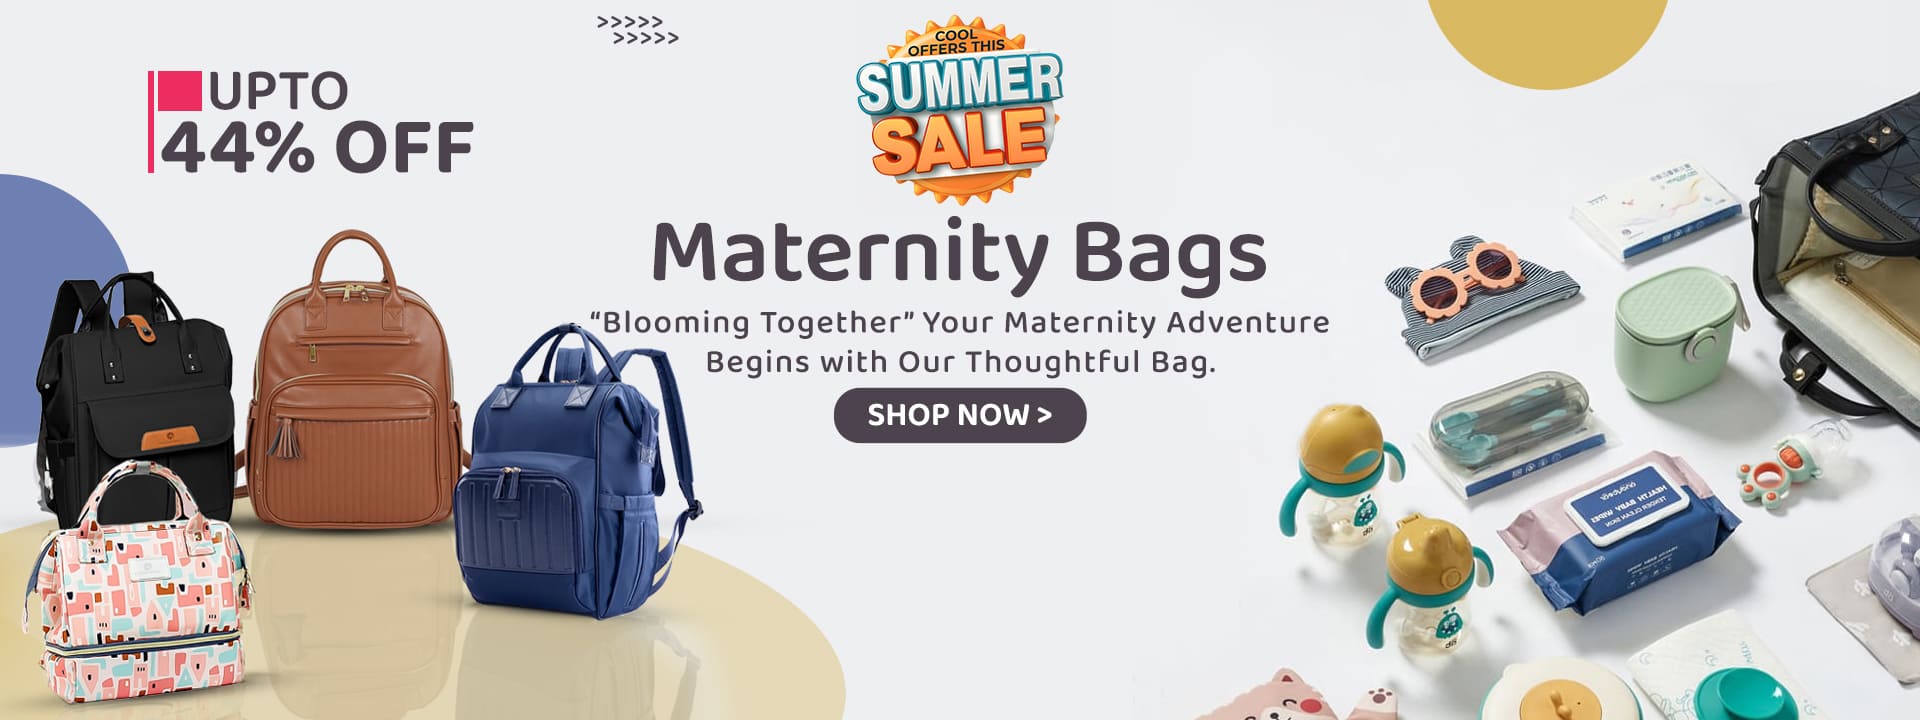 Maternity bags